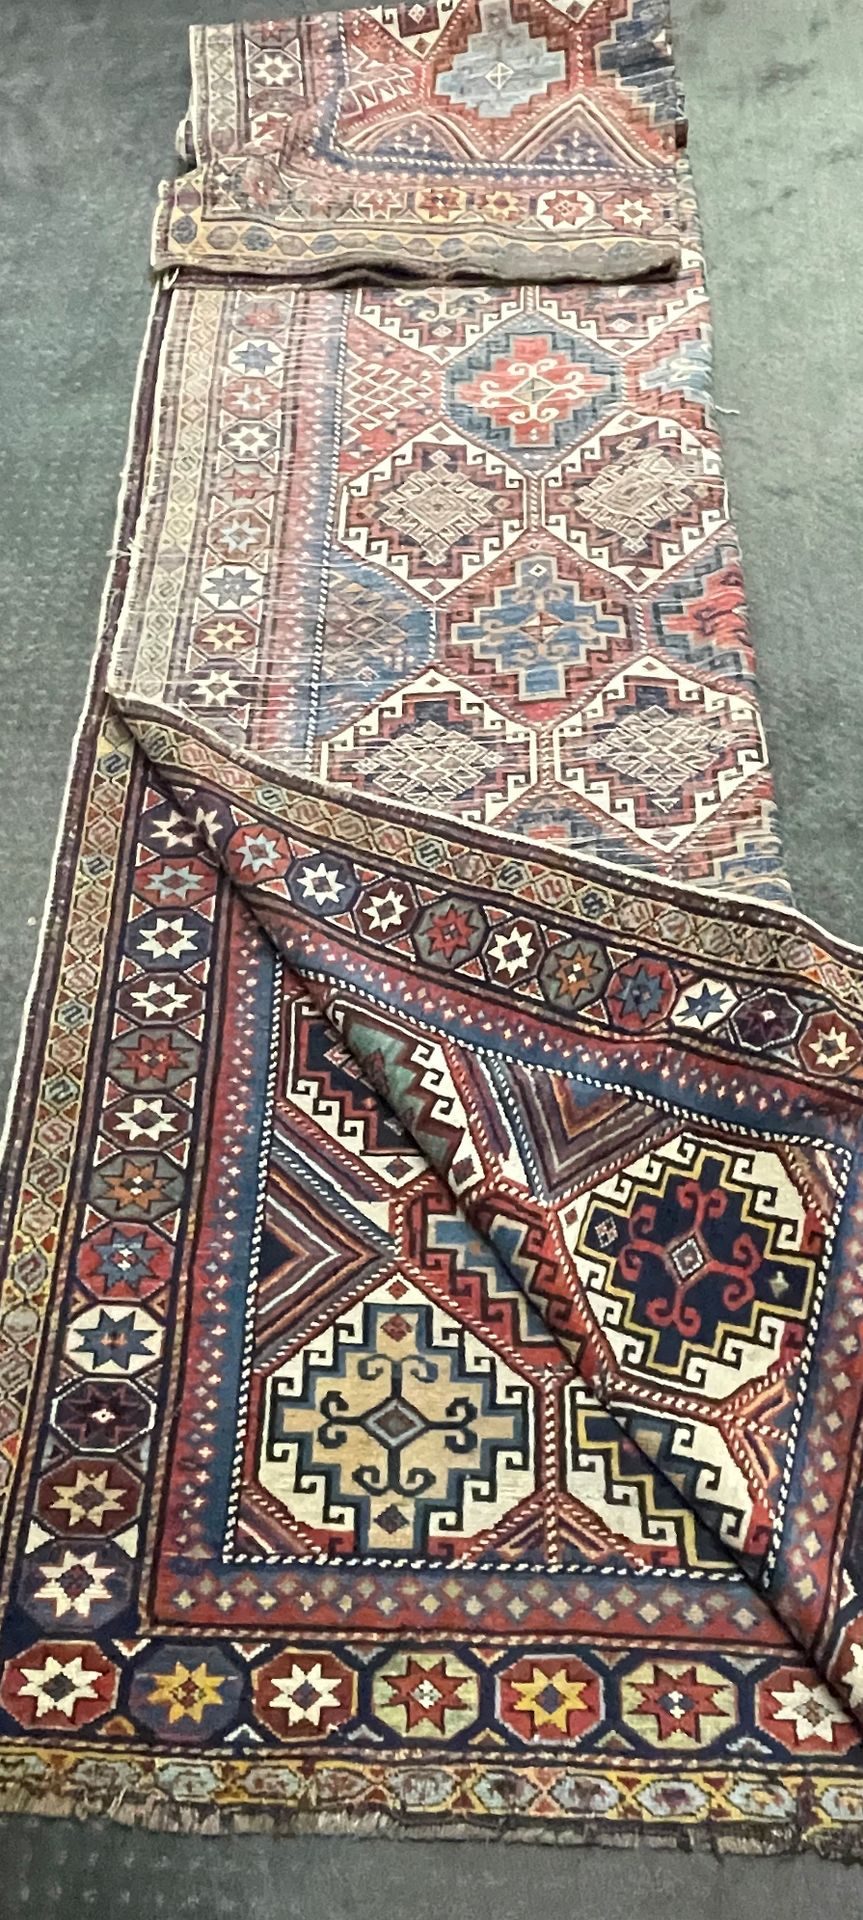 Null 饰有多色几何图案的羊毛画廊地毯（事故，修复，磨损）。哈萨克人，高加索地区。348 x 142 cm